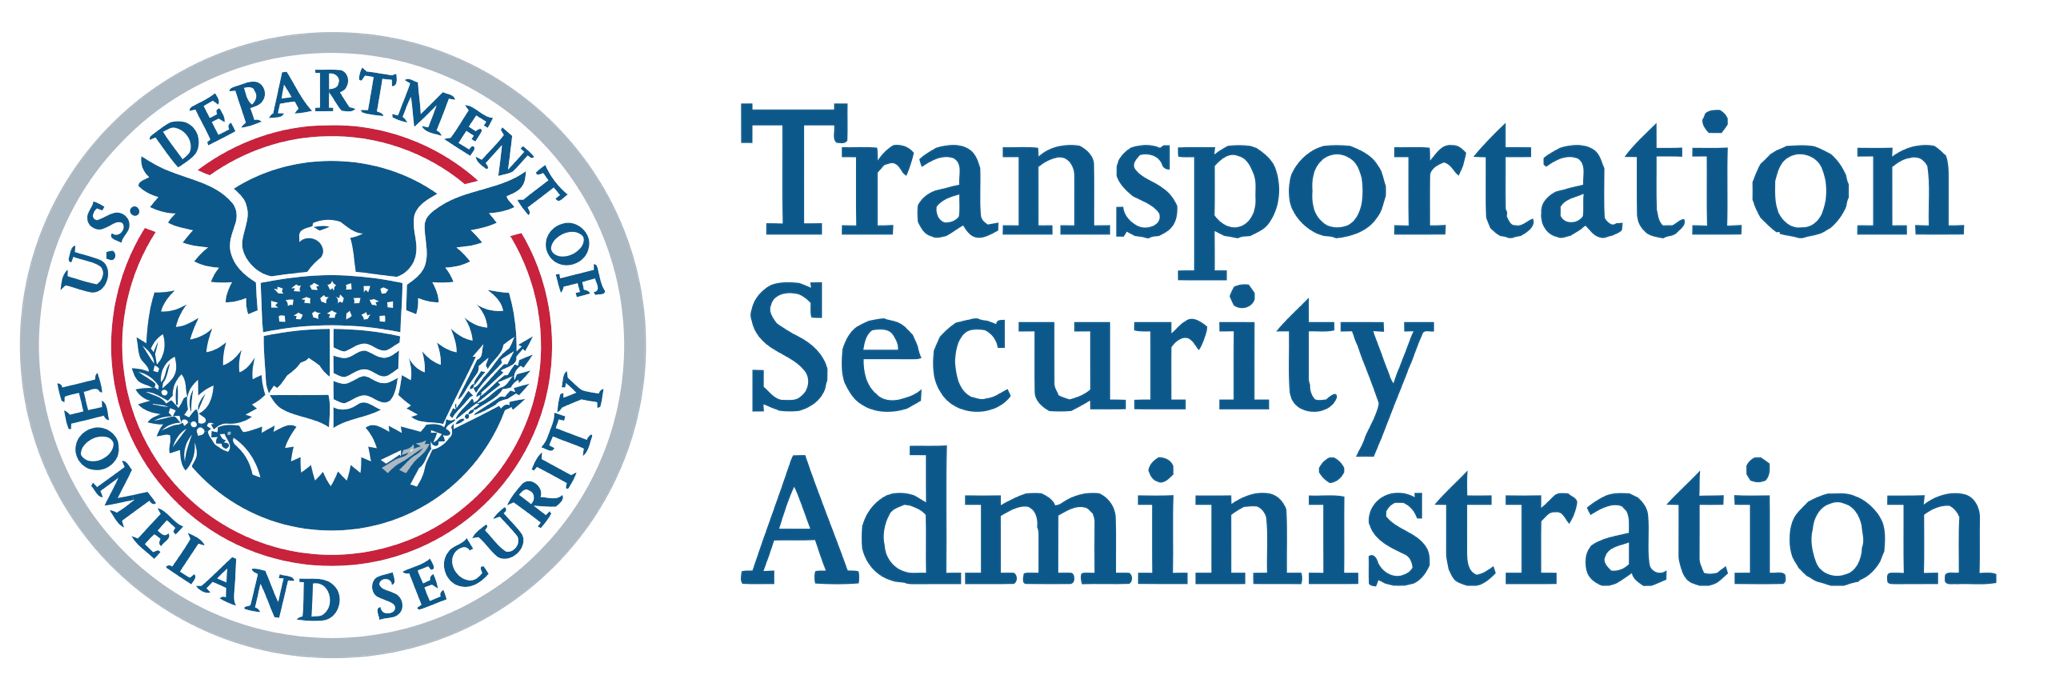 Transportation security administration